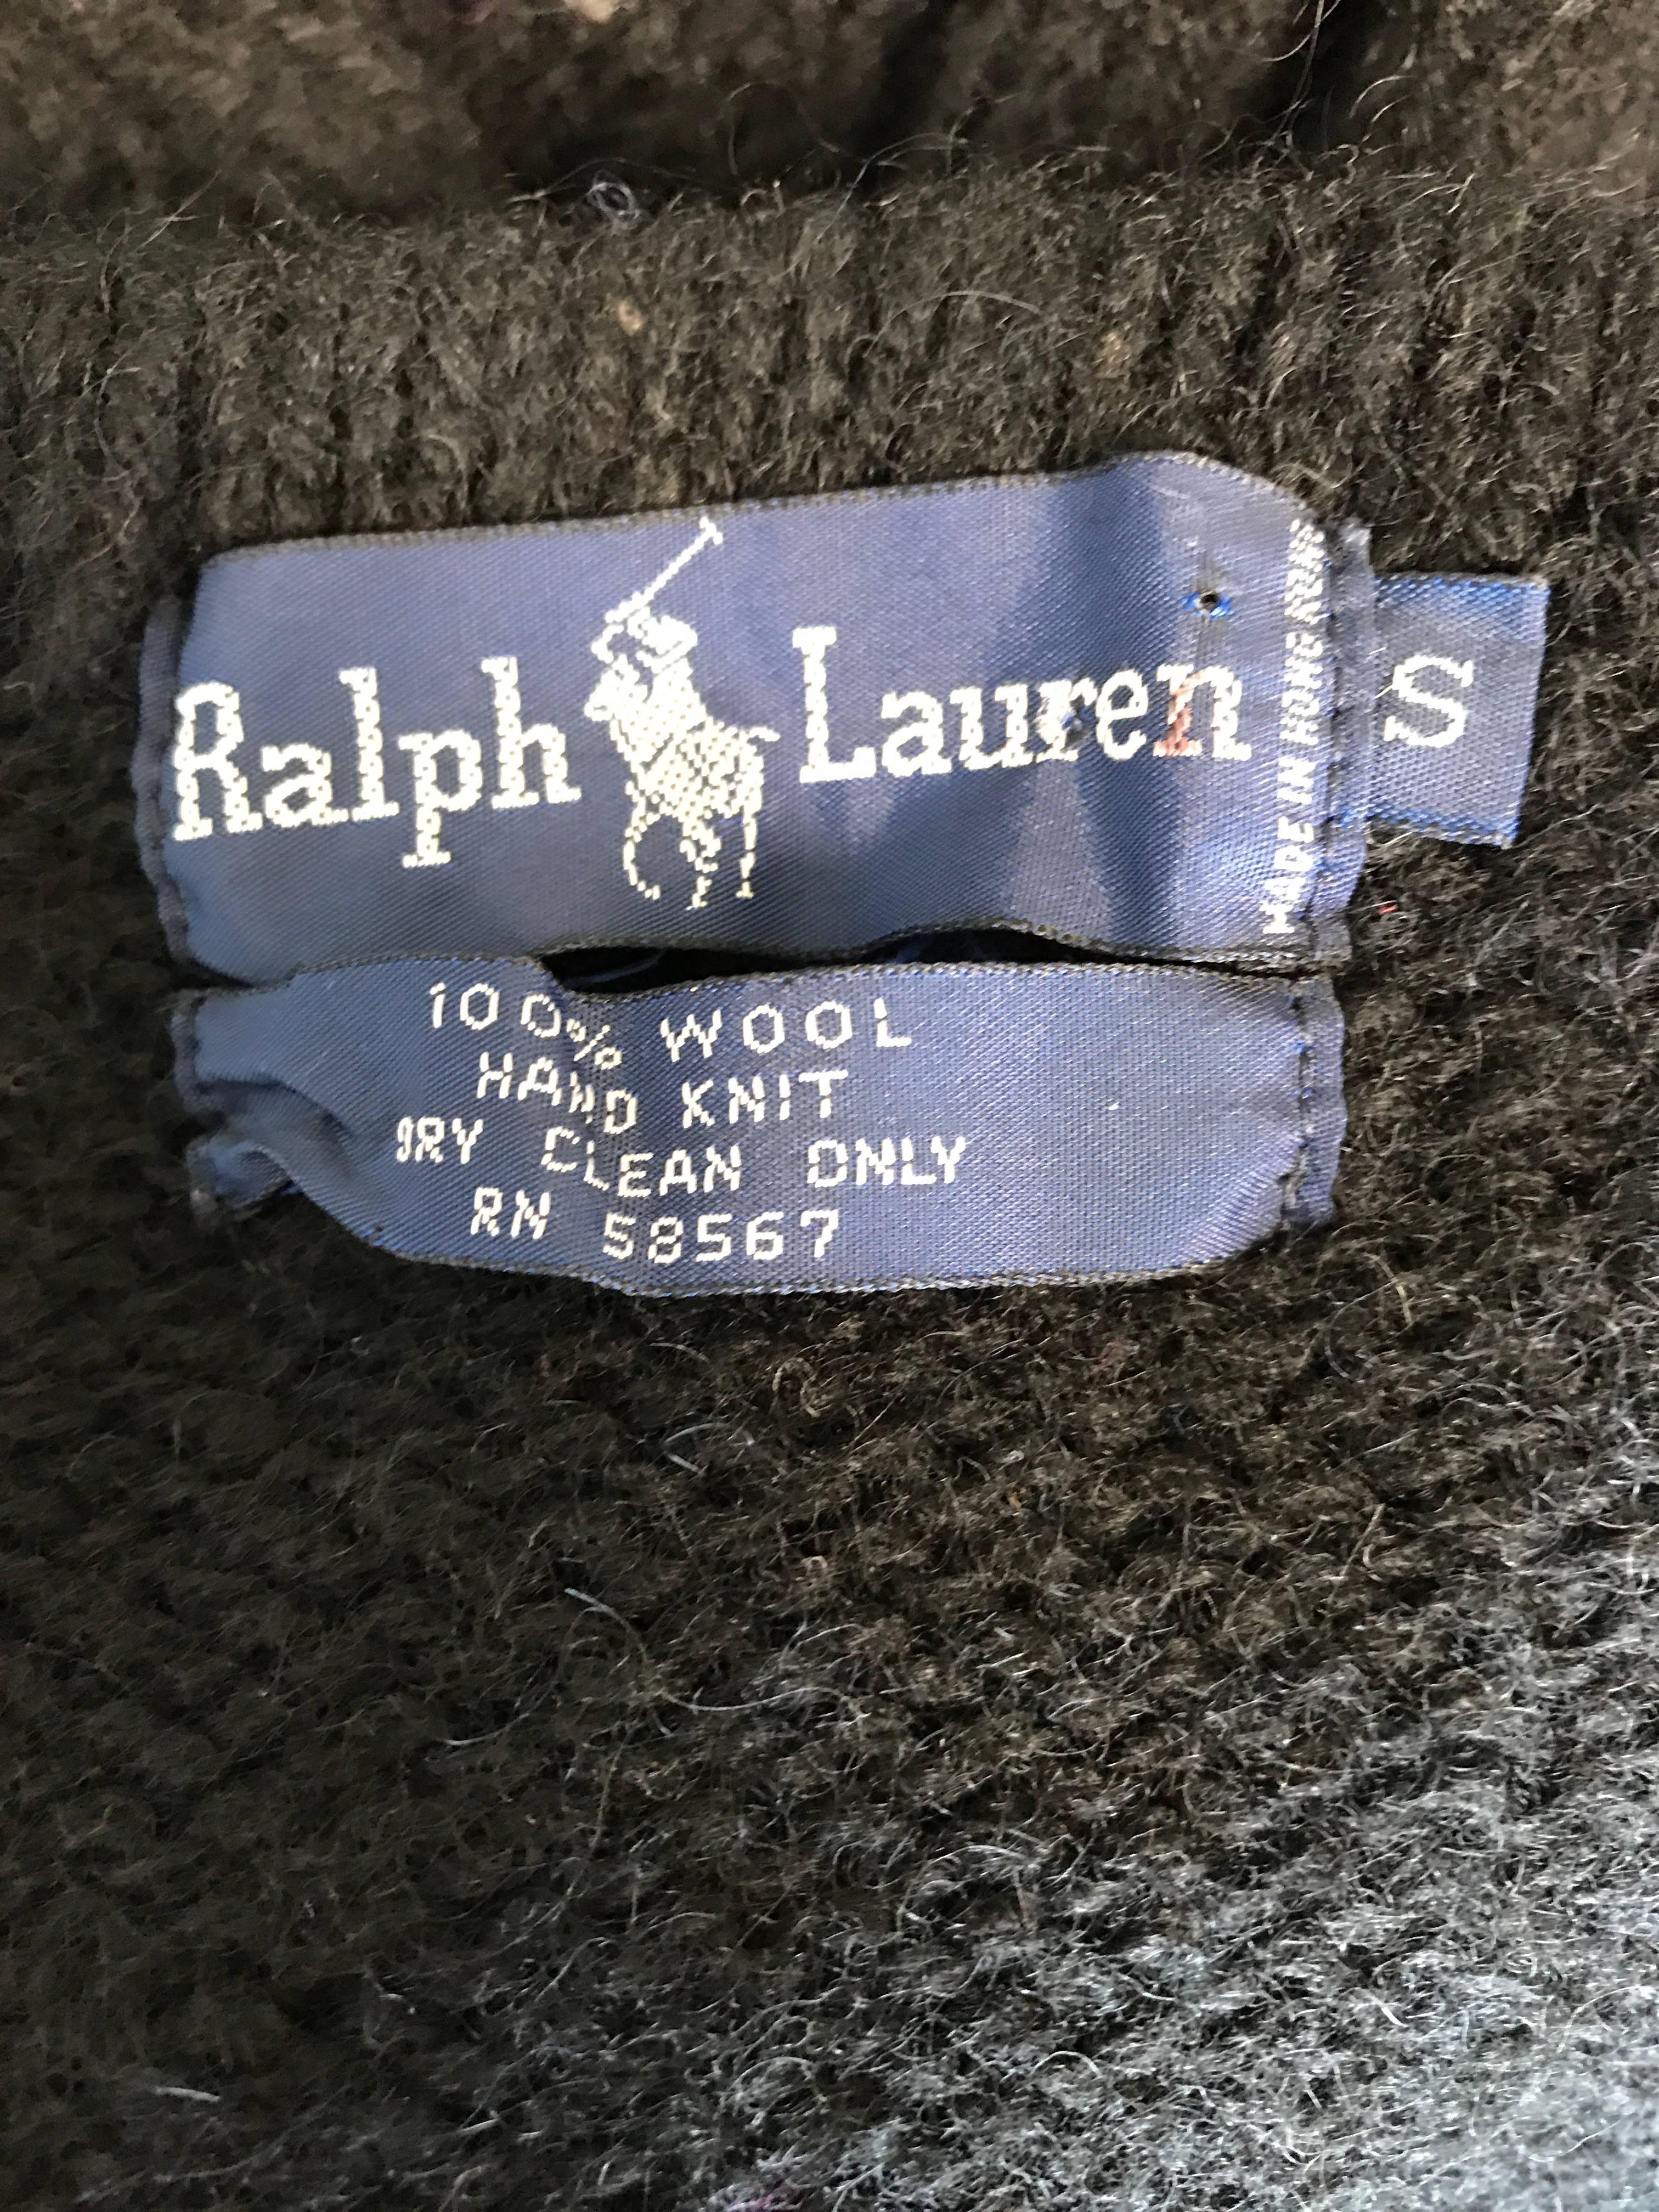 ralph lauren labels vintage